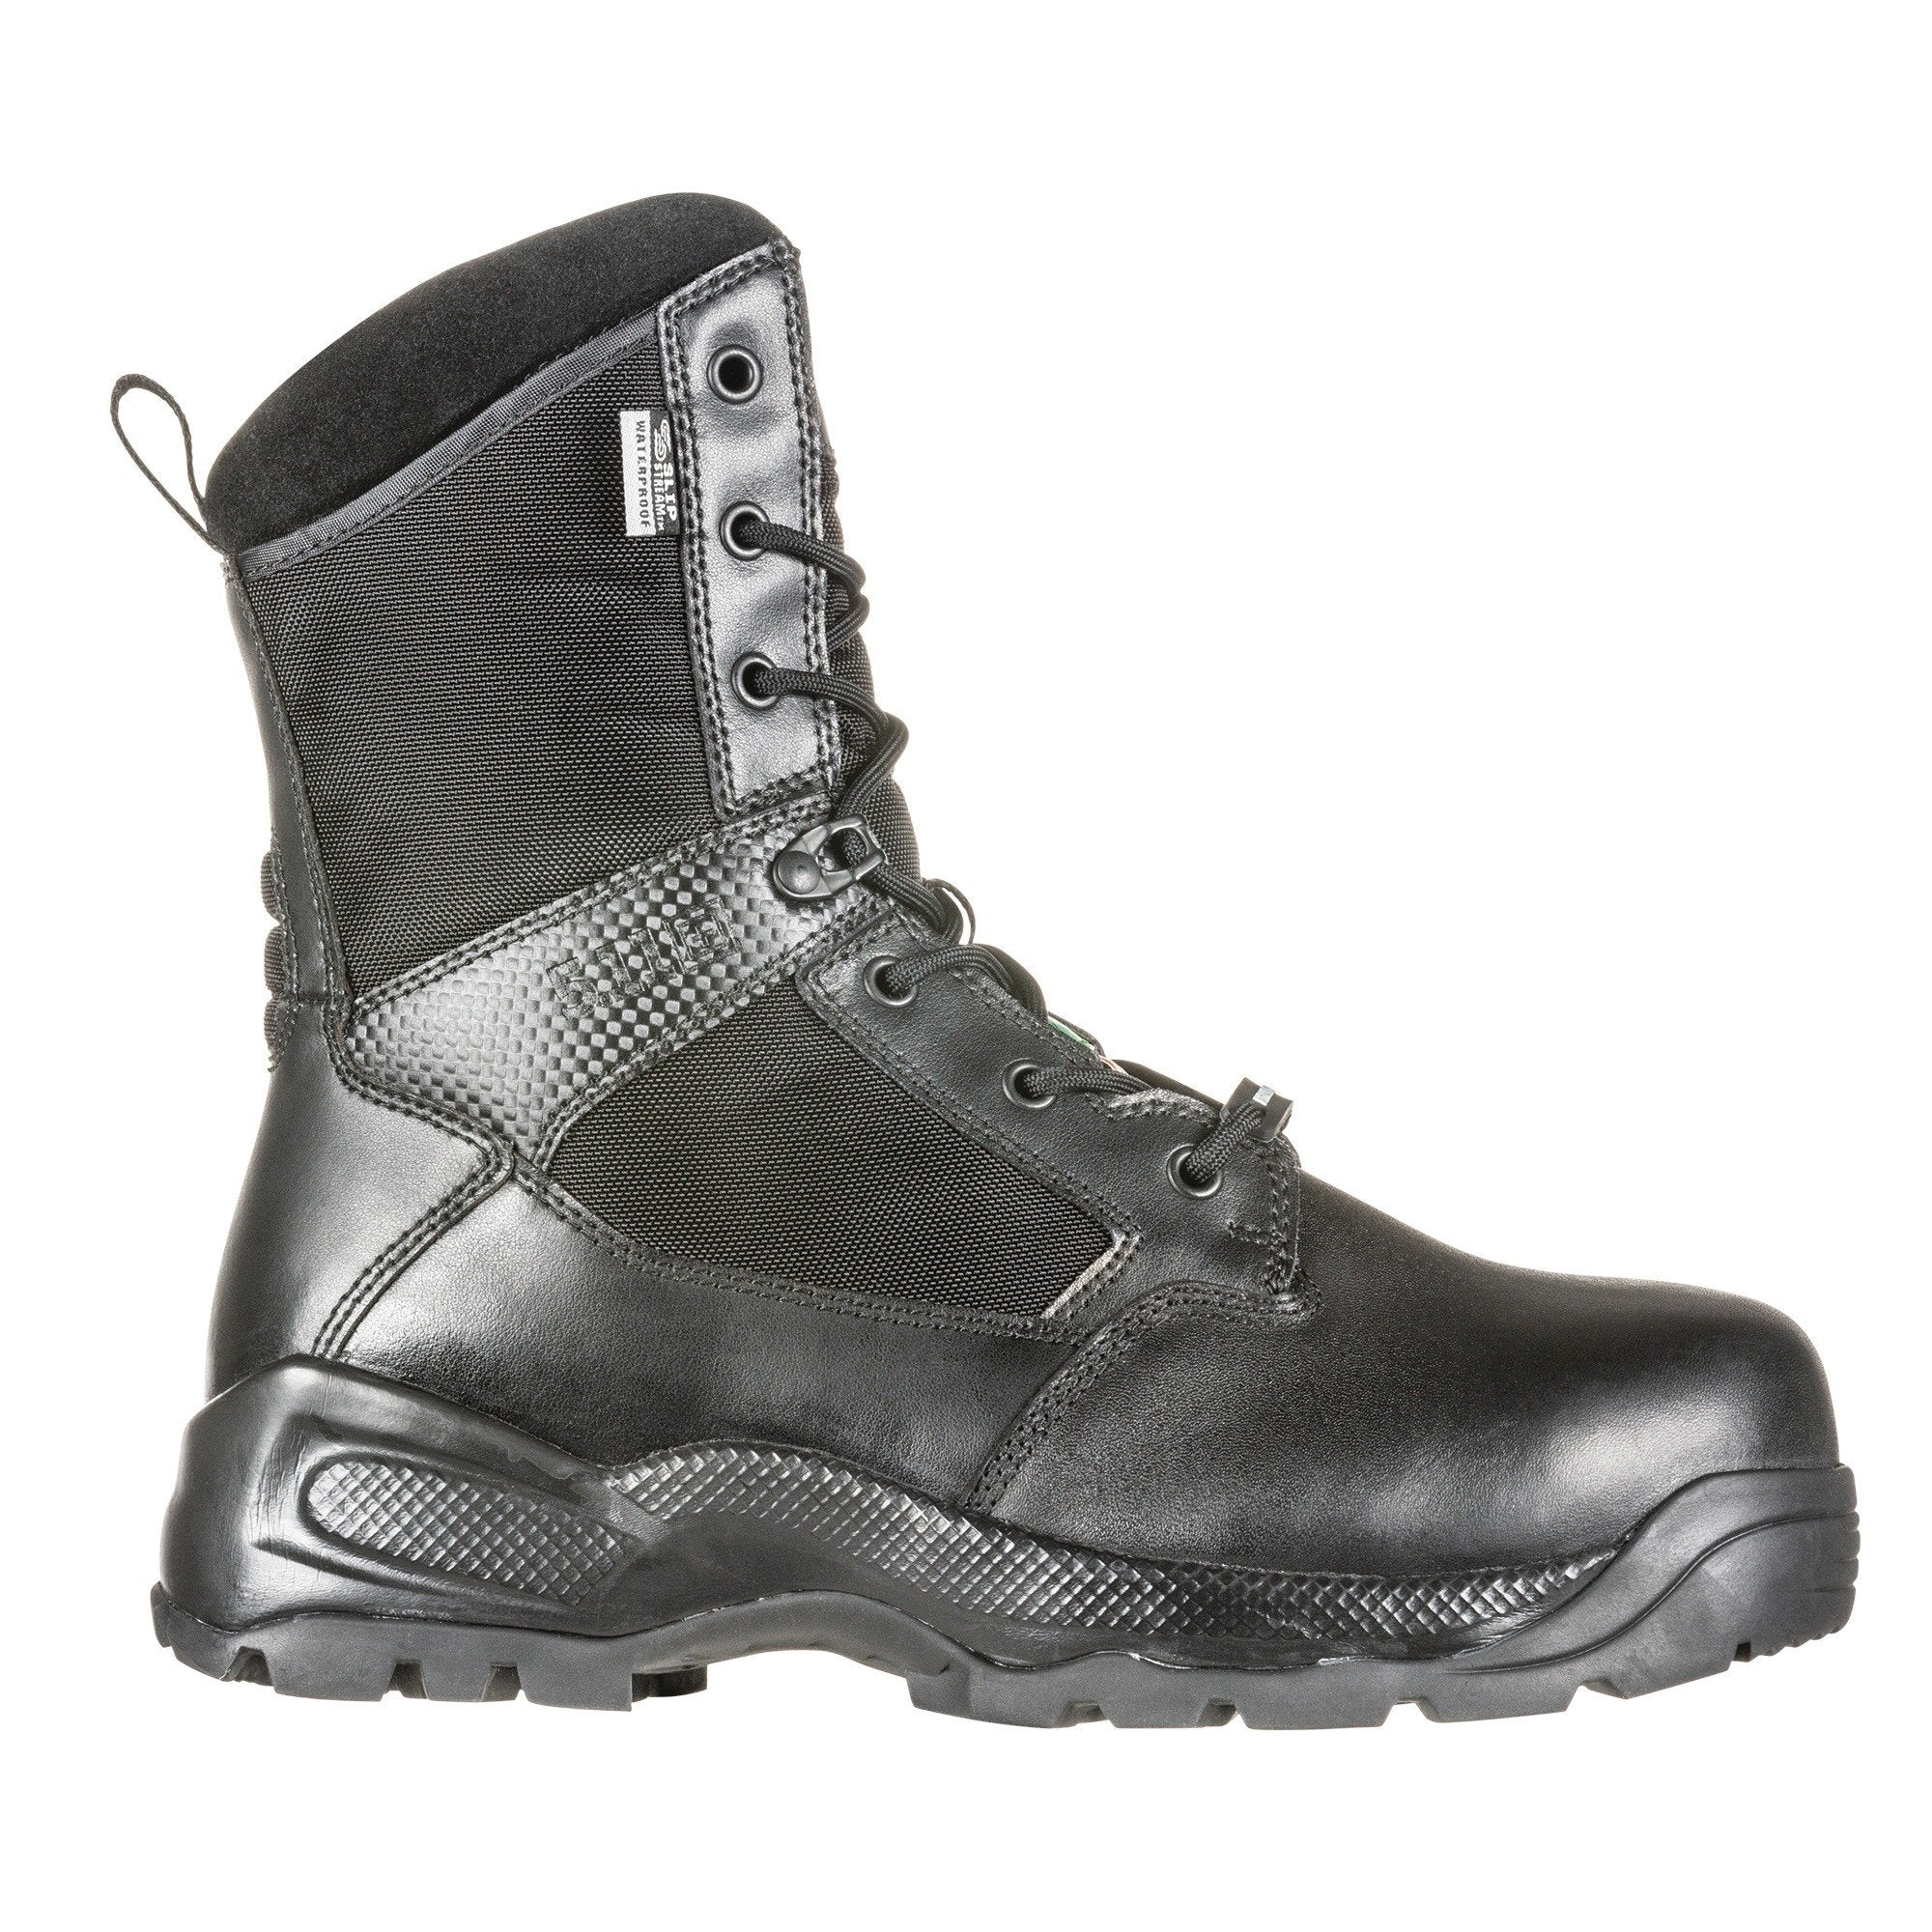 5.11 Tactical ATAC 8 Inches Shield 2.0 Side Zip Boots Black Footwear 5.11 Tactical Tactical Gear Supplier Tactical Distributors Australia